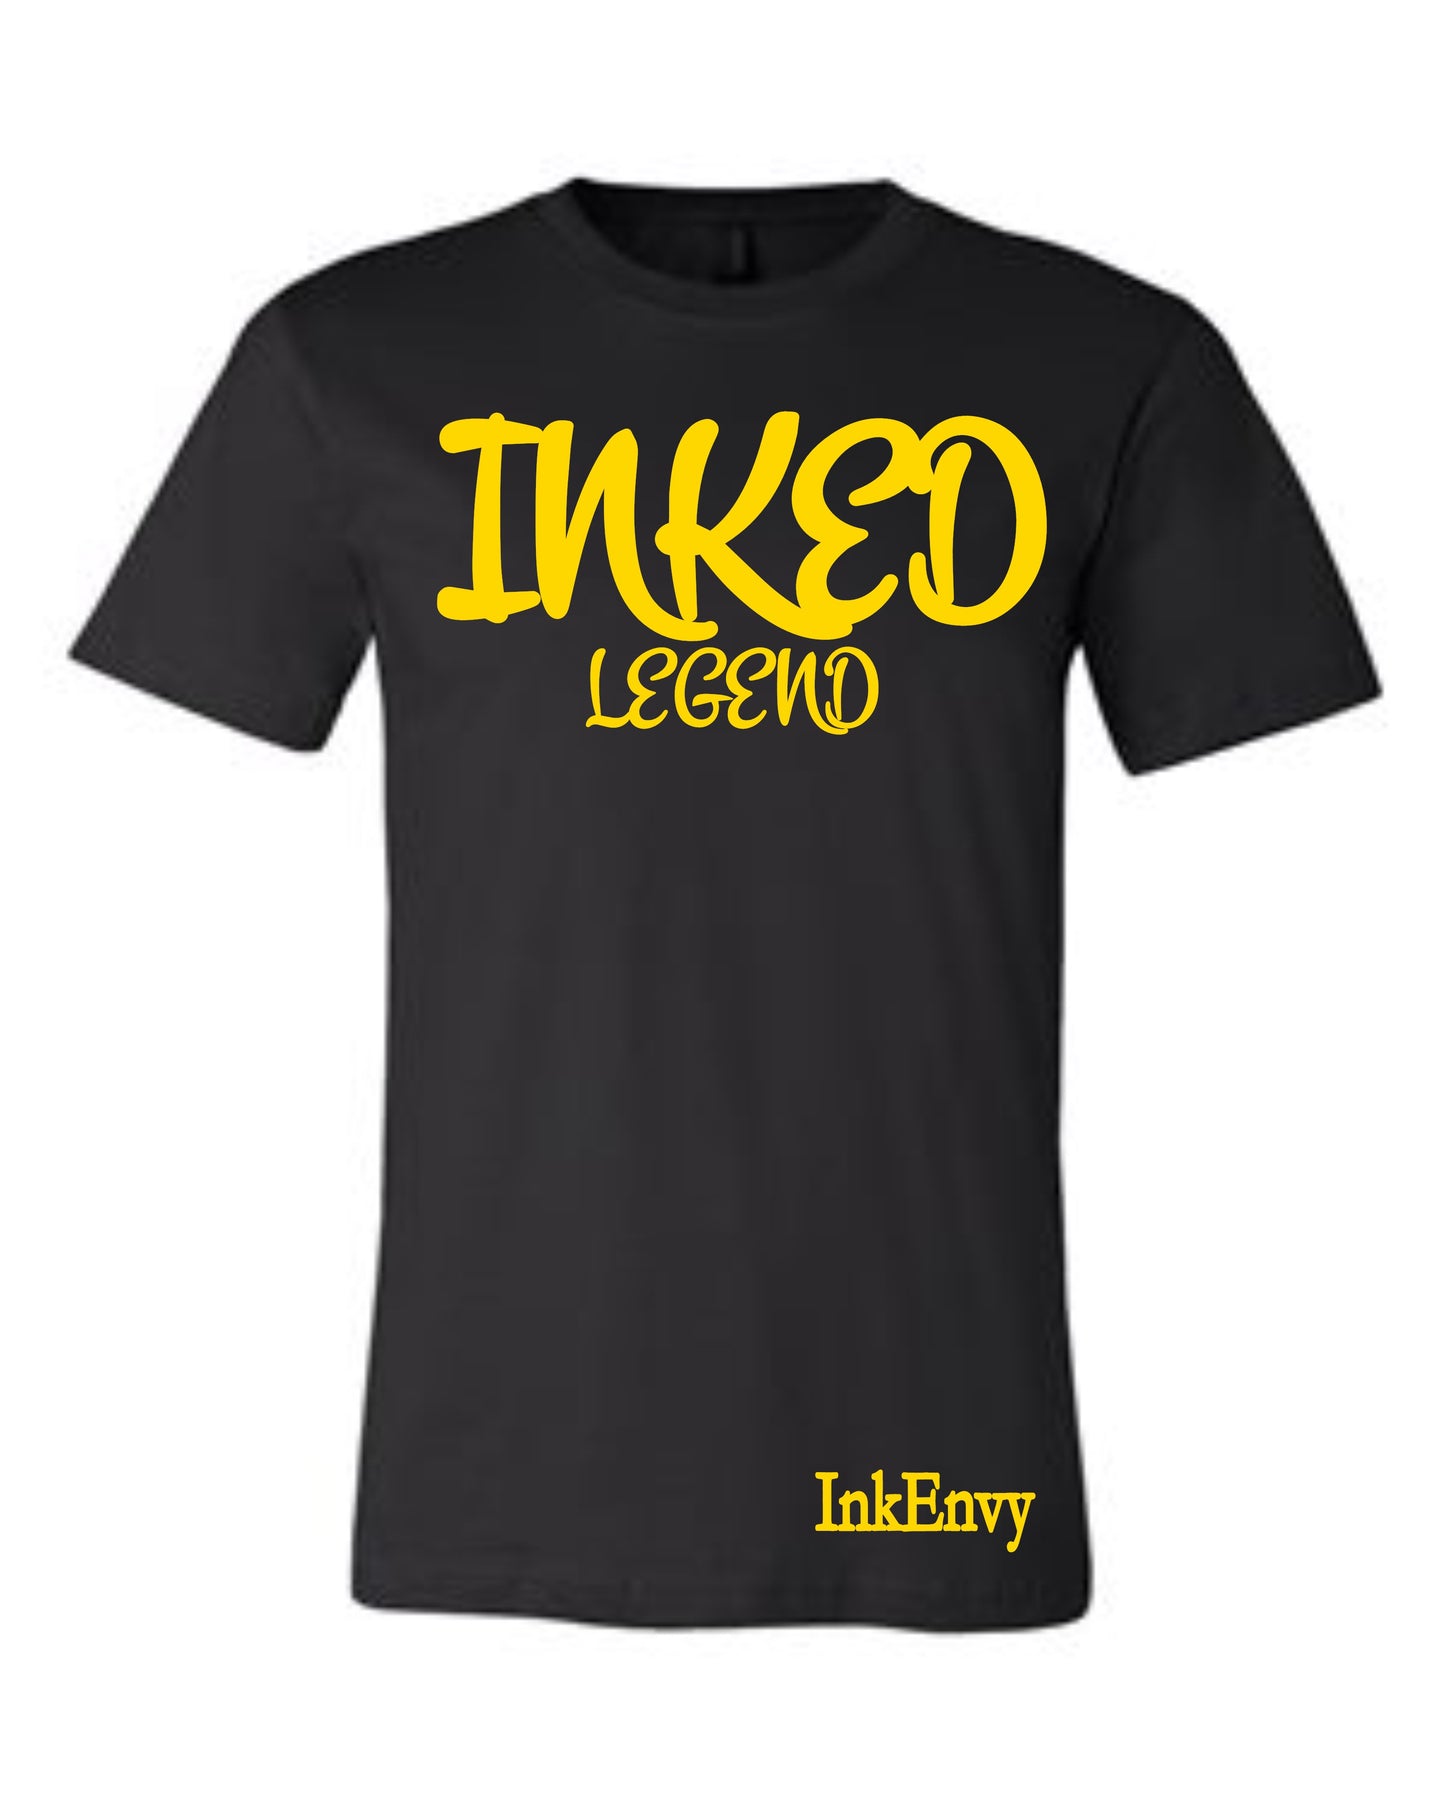 Inked Legend Gold and Black Tee I Premium Tee